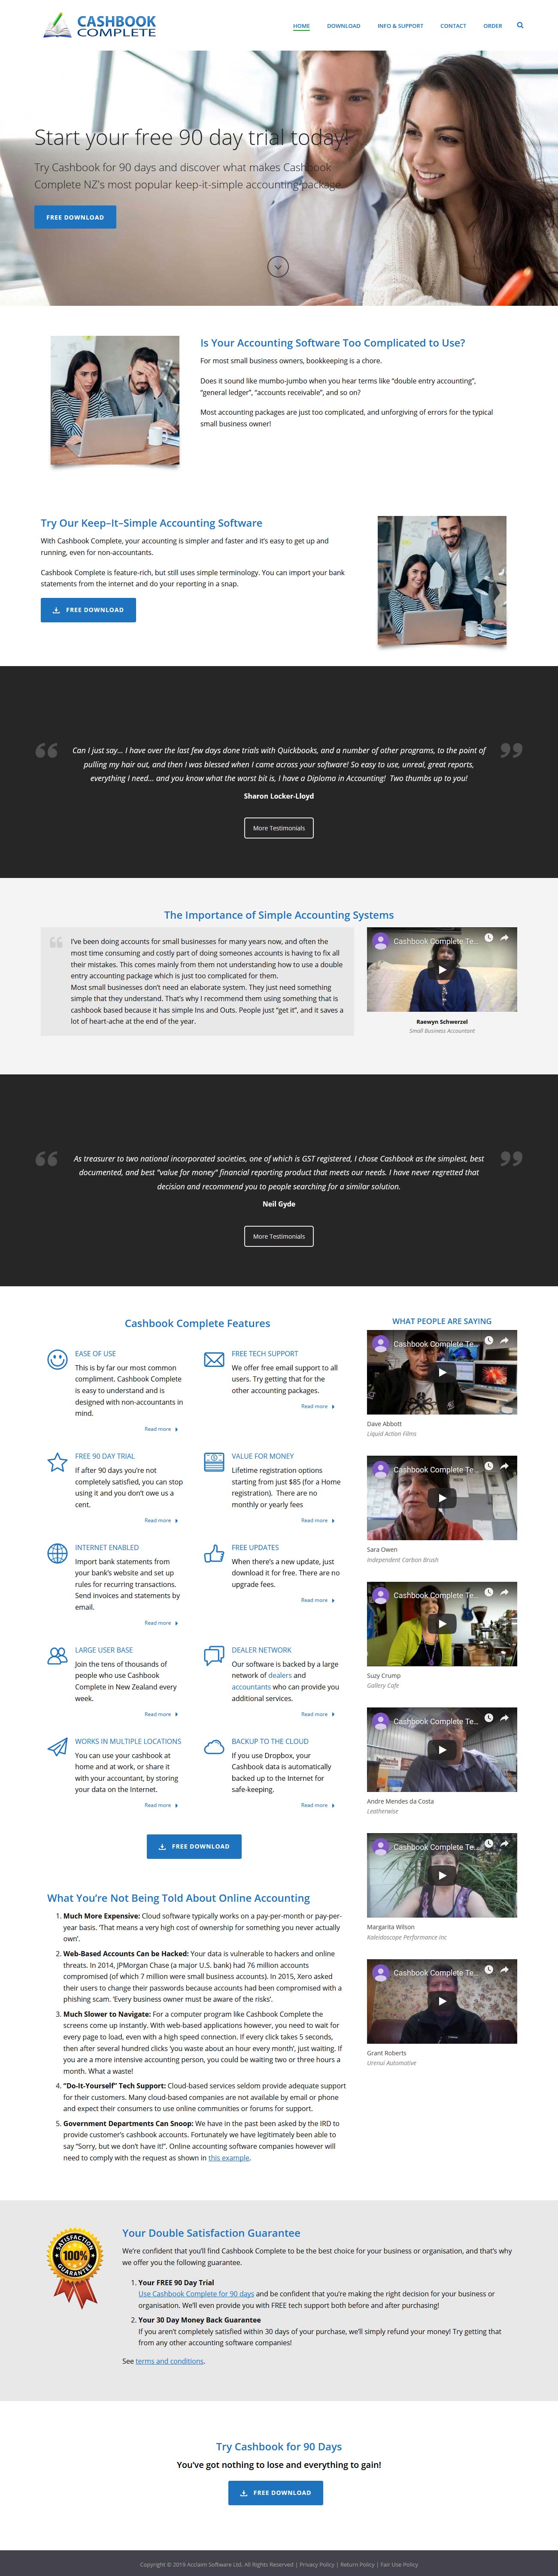 Website design for Acclaim Software